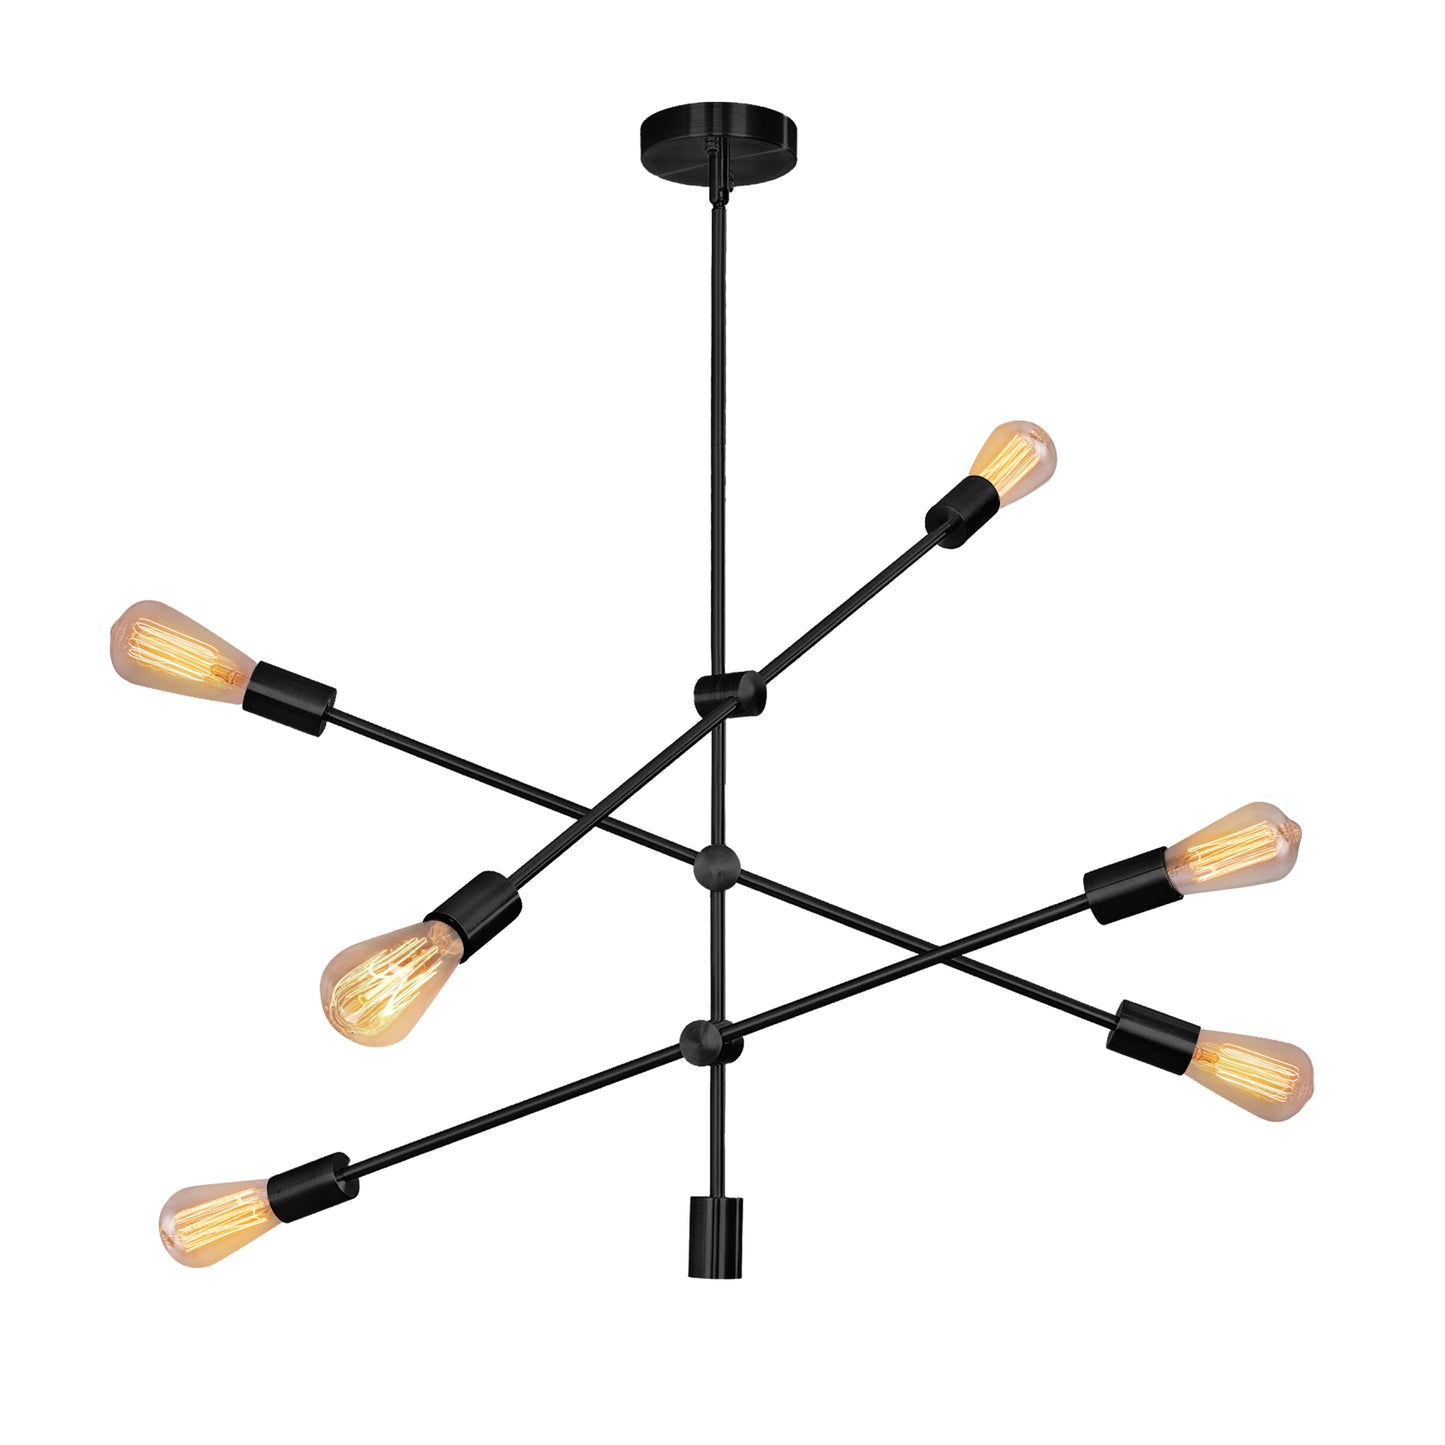 6 Lights Sputnik Chandelier, Modern Pendant Lighting Ceiling Light Fixture Mid Century Style, Black